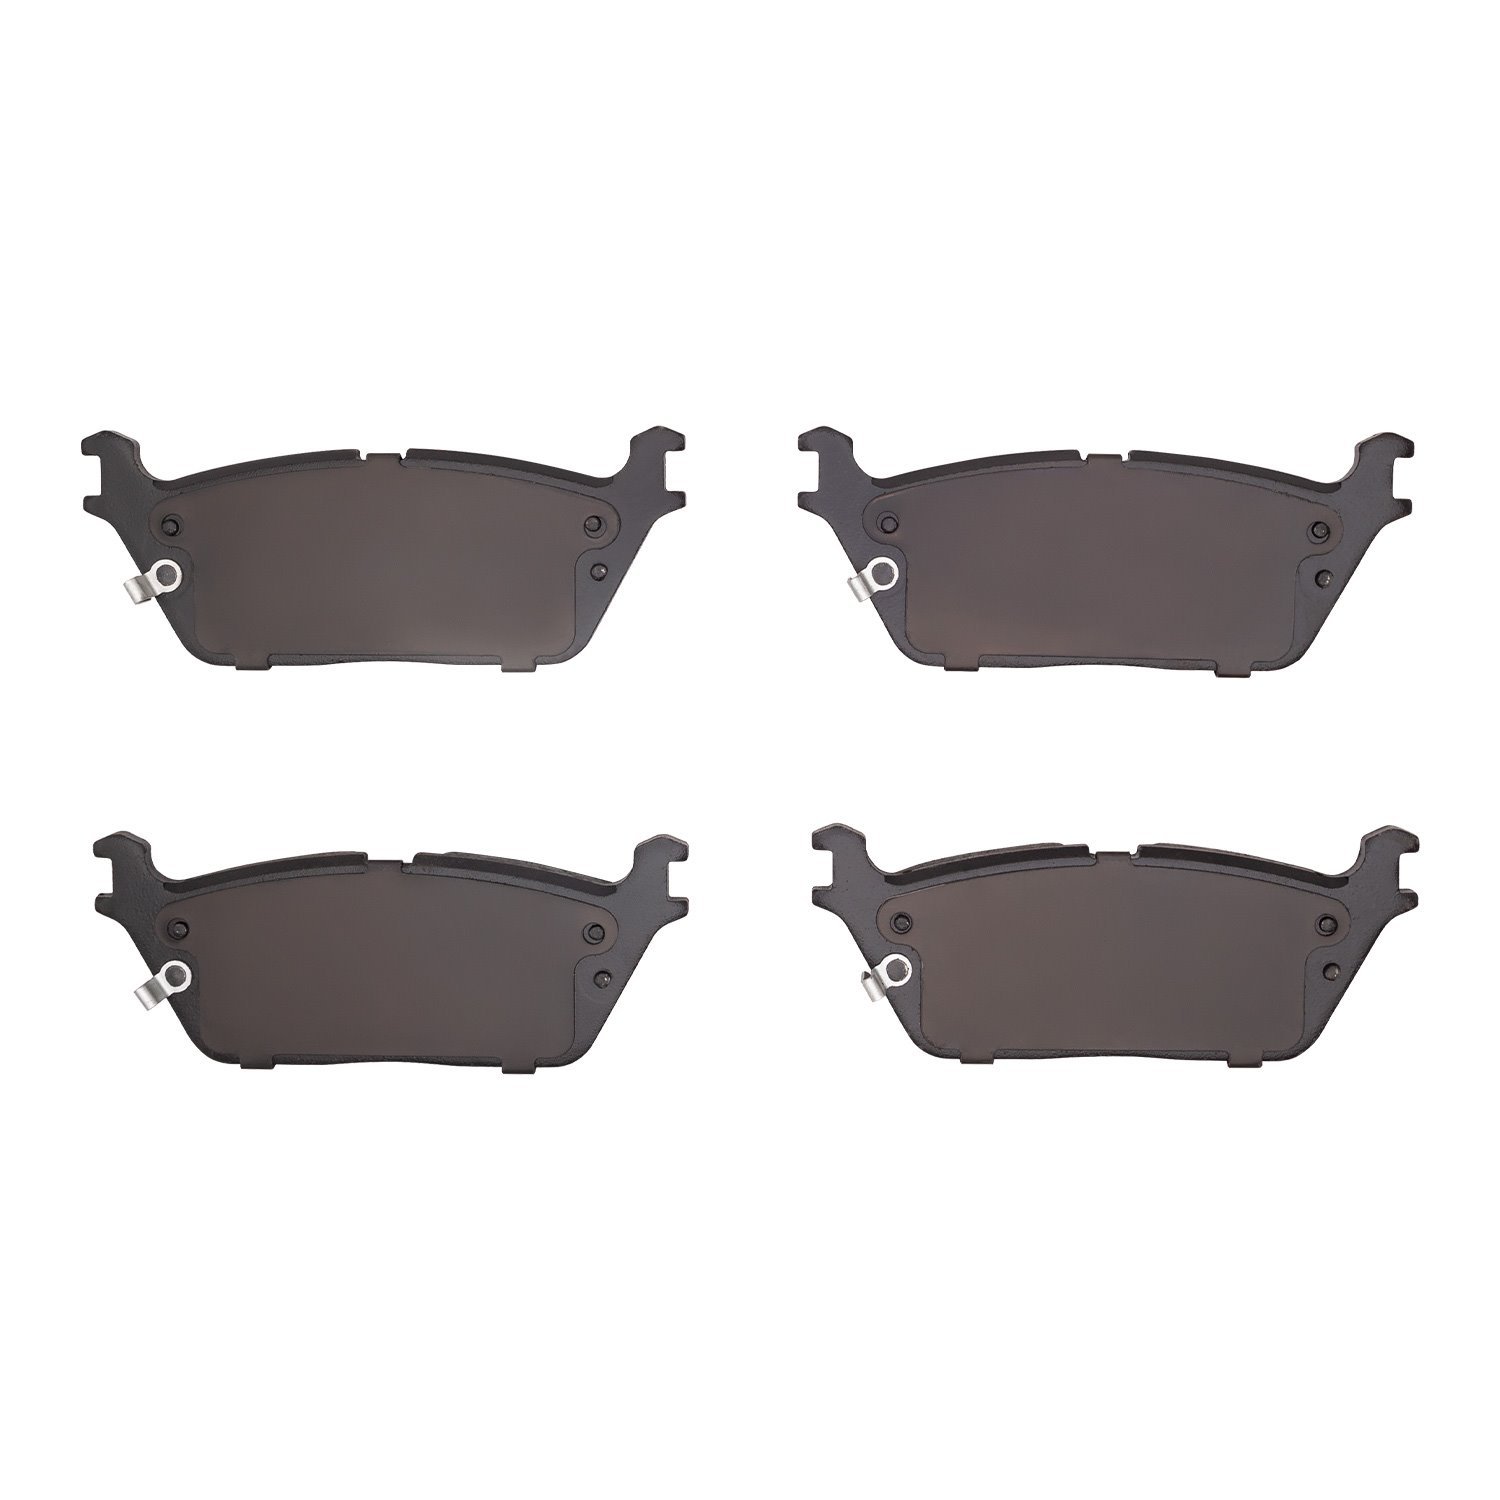 1310-2169-00 3000-Series Ceramic Brake Pads, Fits Select Mopar, Position: Rear